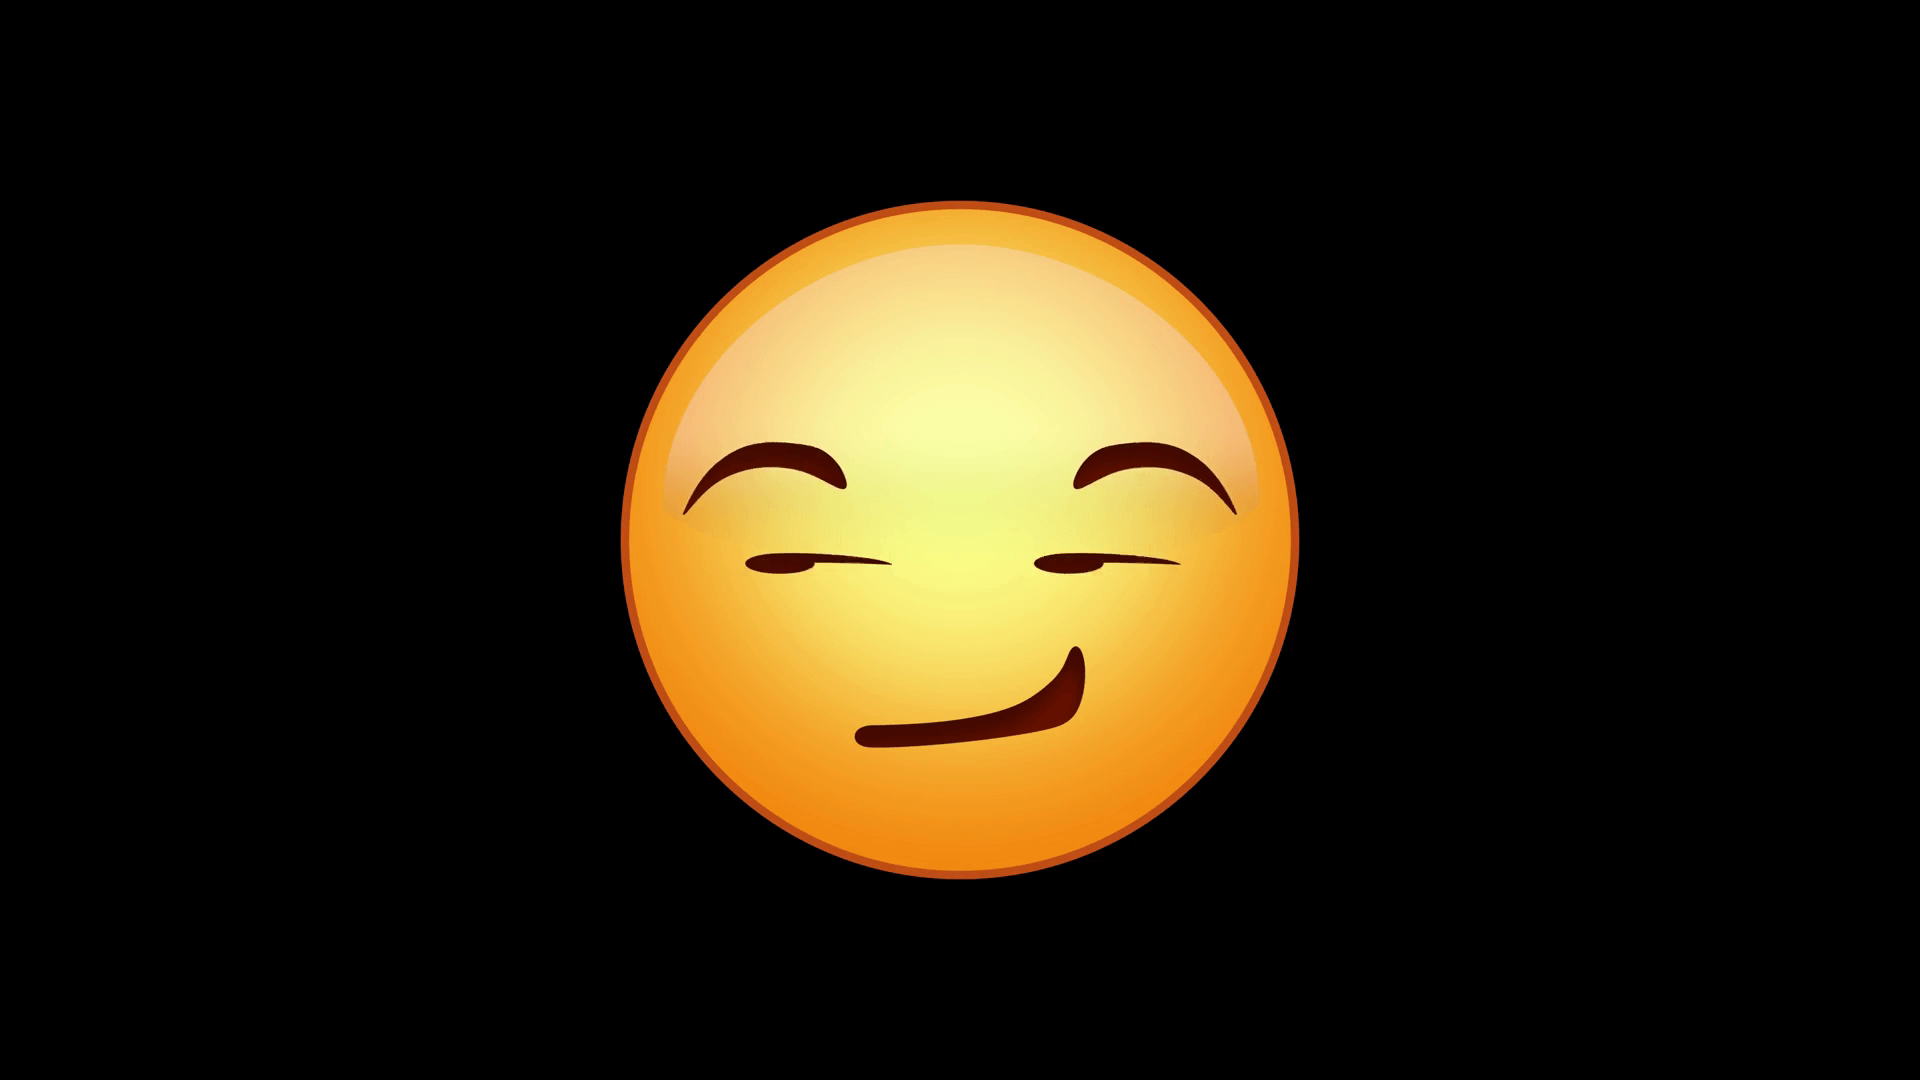 Smirking emoji emoticon animated loops. Easy integration to any